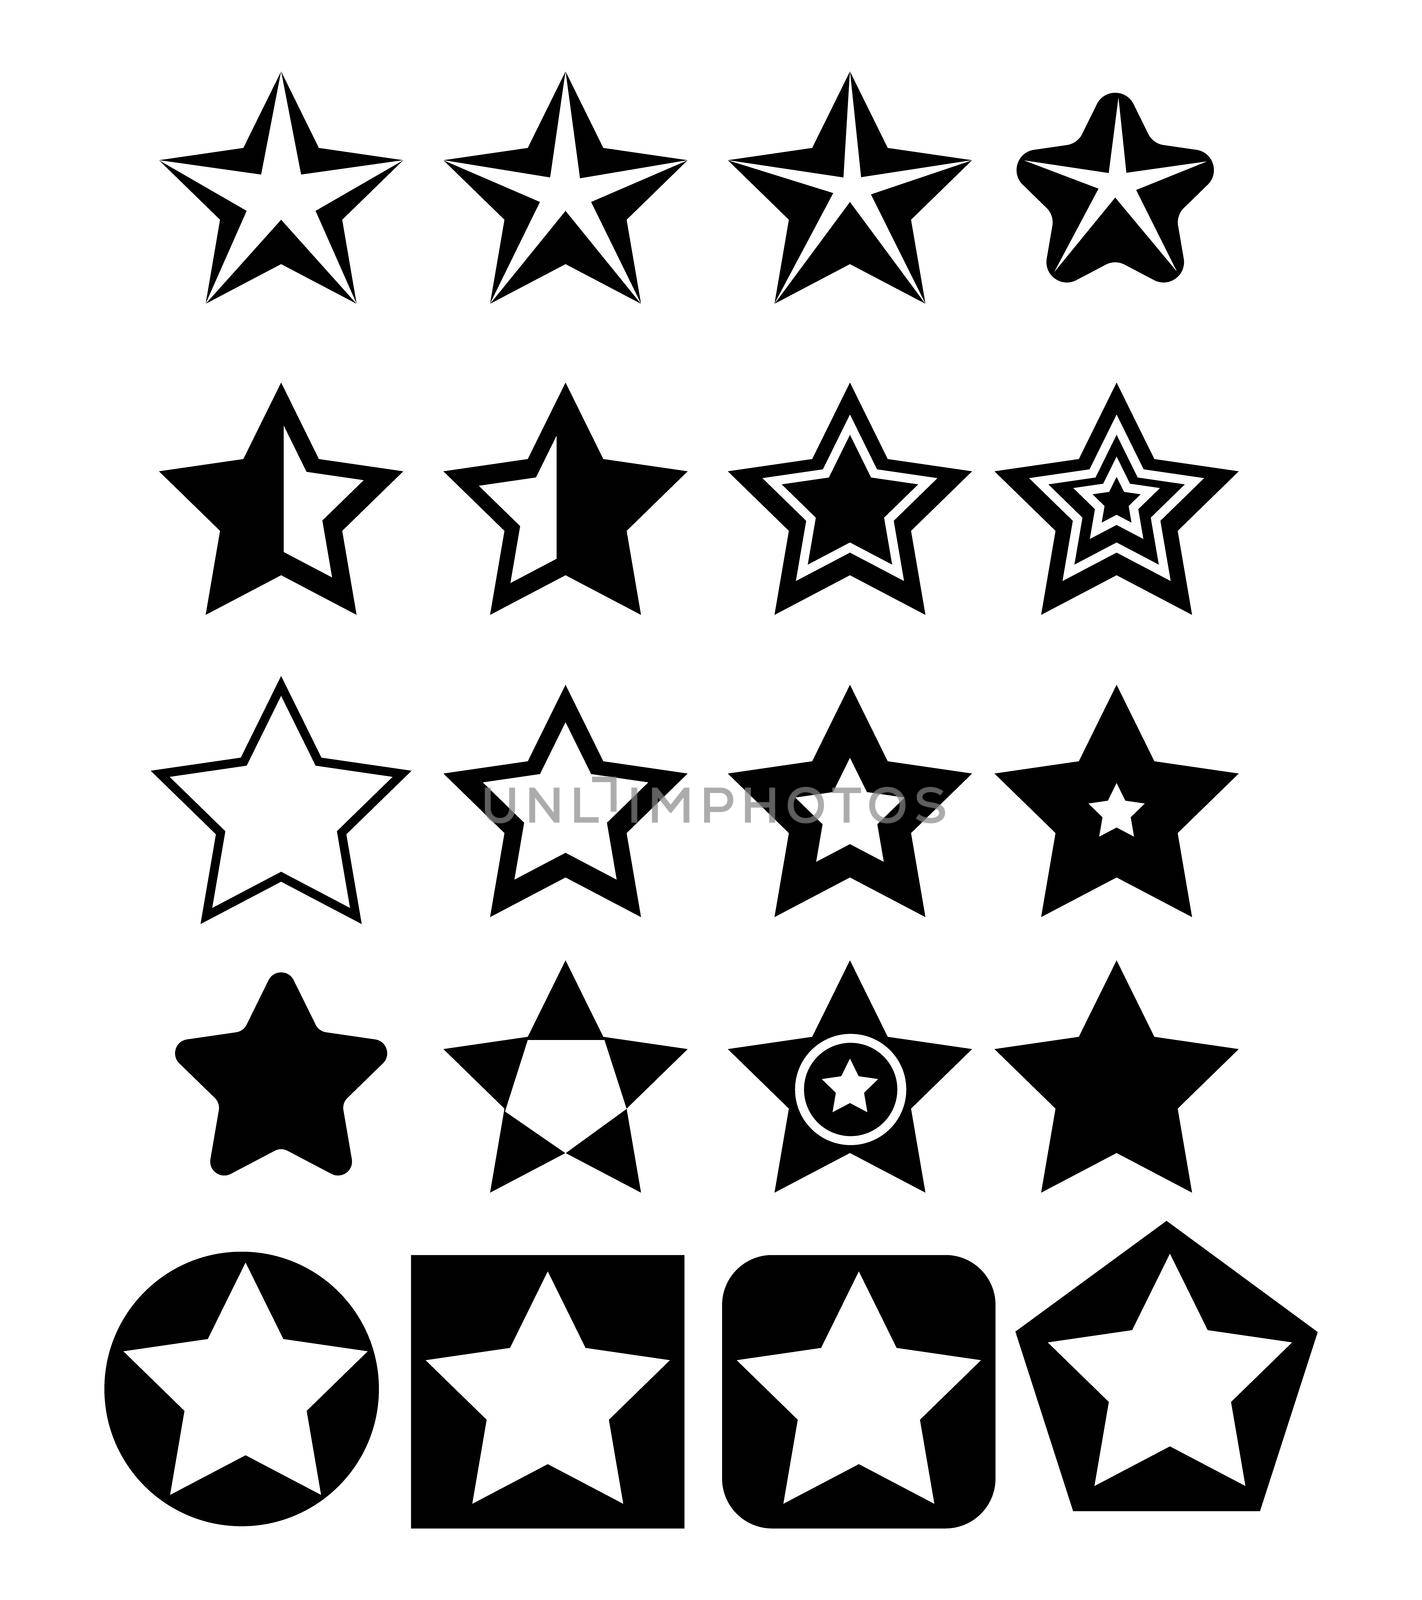 Pentagonal five point star collection emblem icon design elements, illustration template set